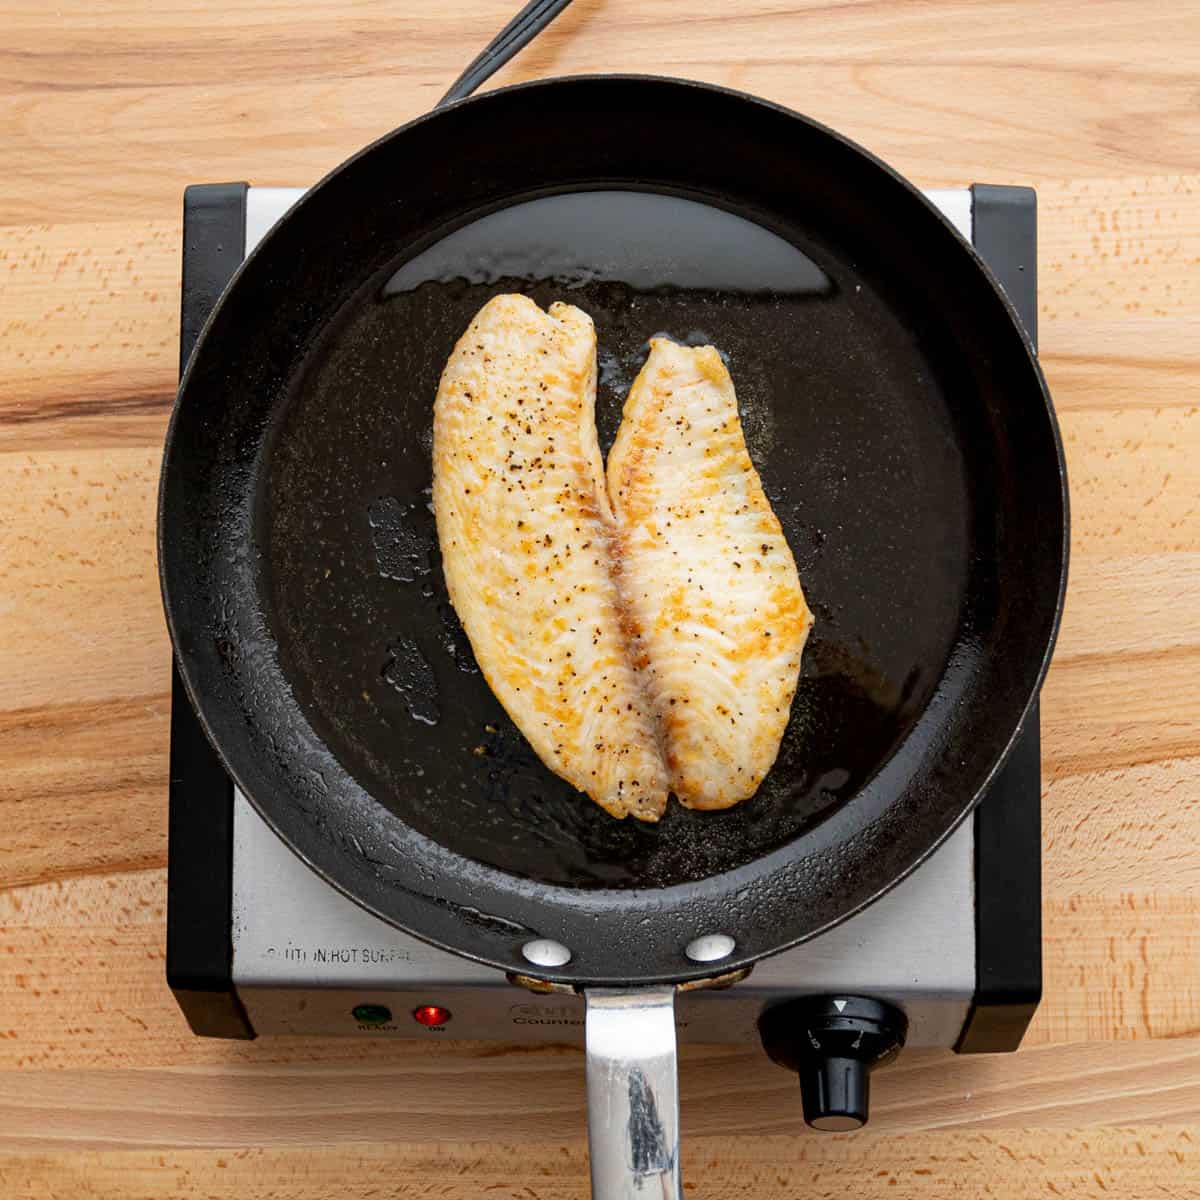  cook the fish fillets for 1.5 - 2 minutes per side or until golden brown. 